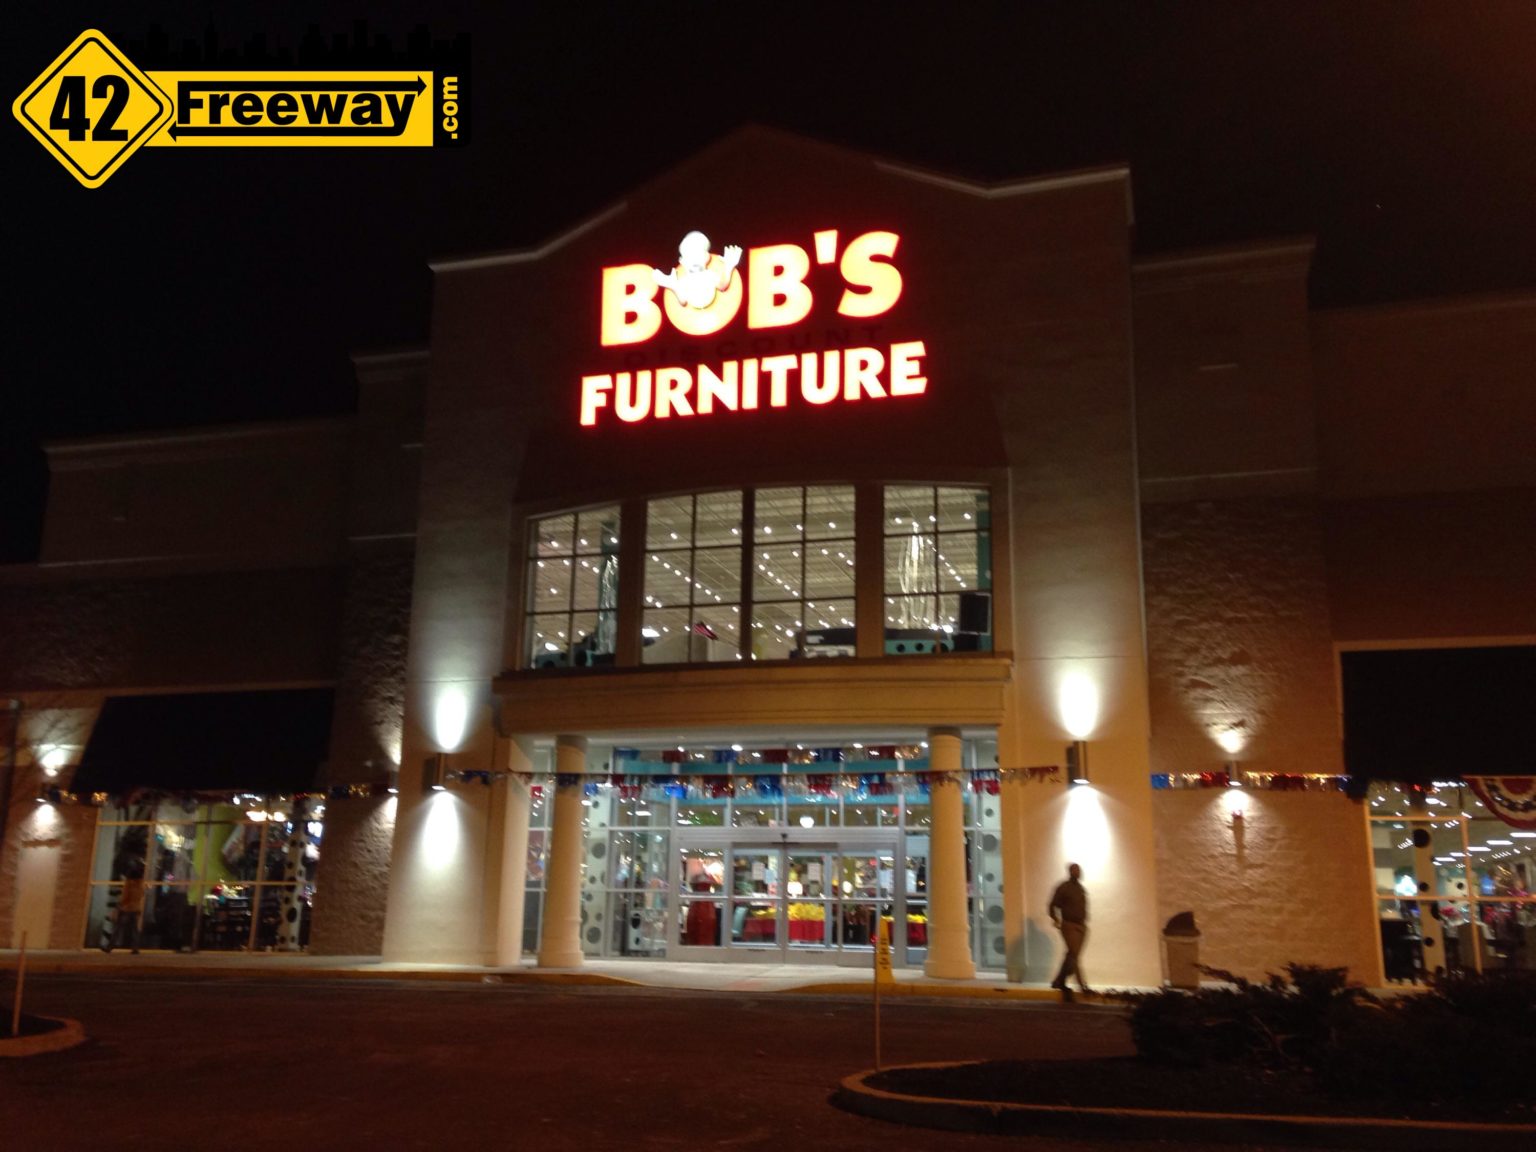 Bobs Discount Furniture Opens Thurs Feb 12 42 Freeway